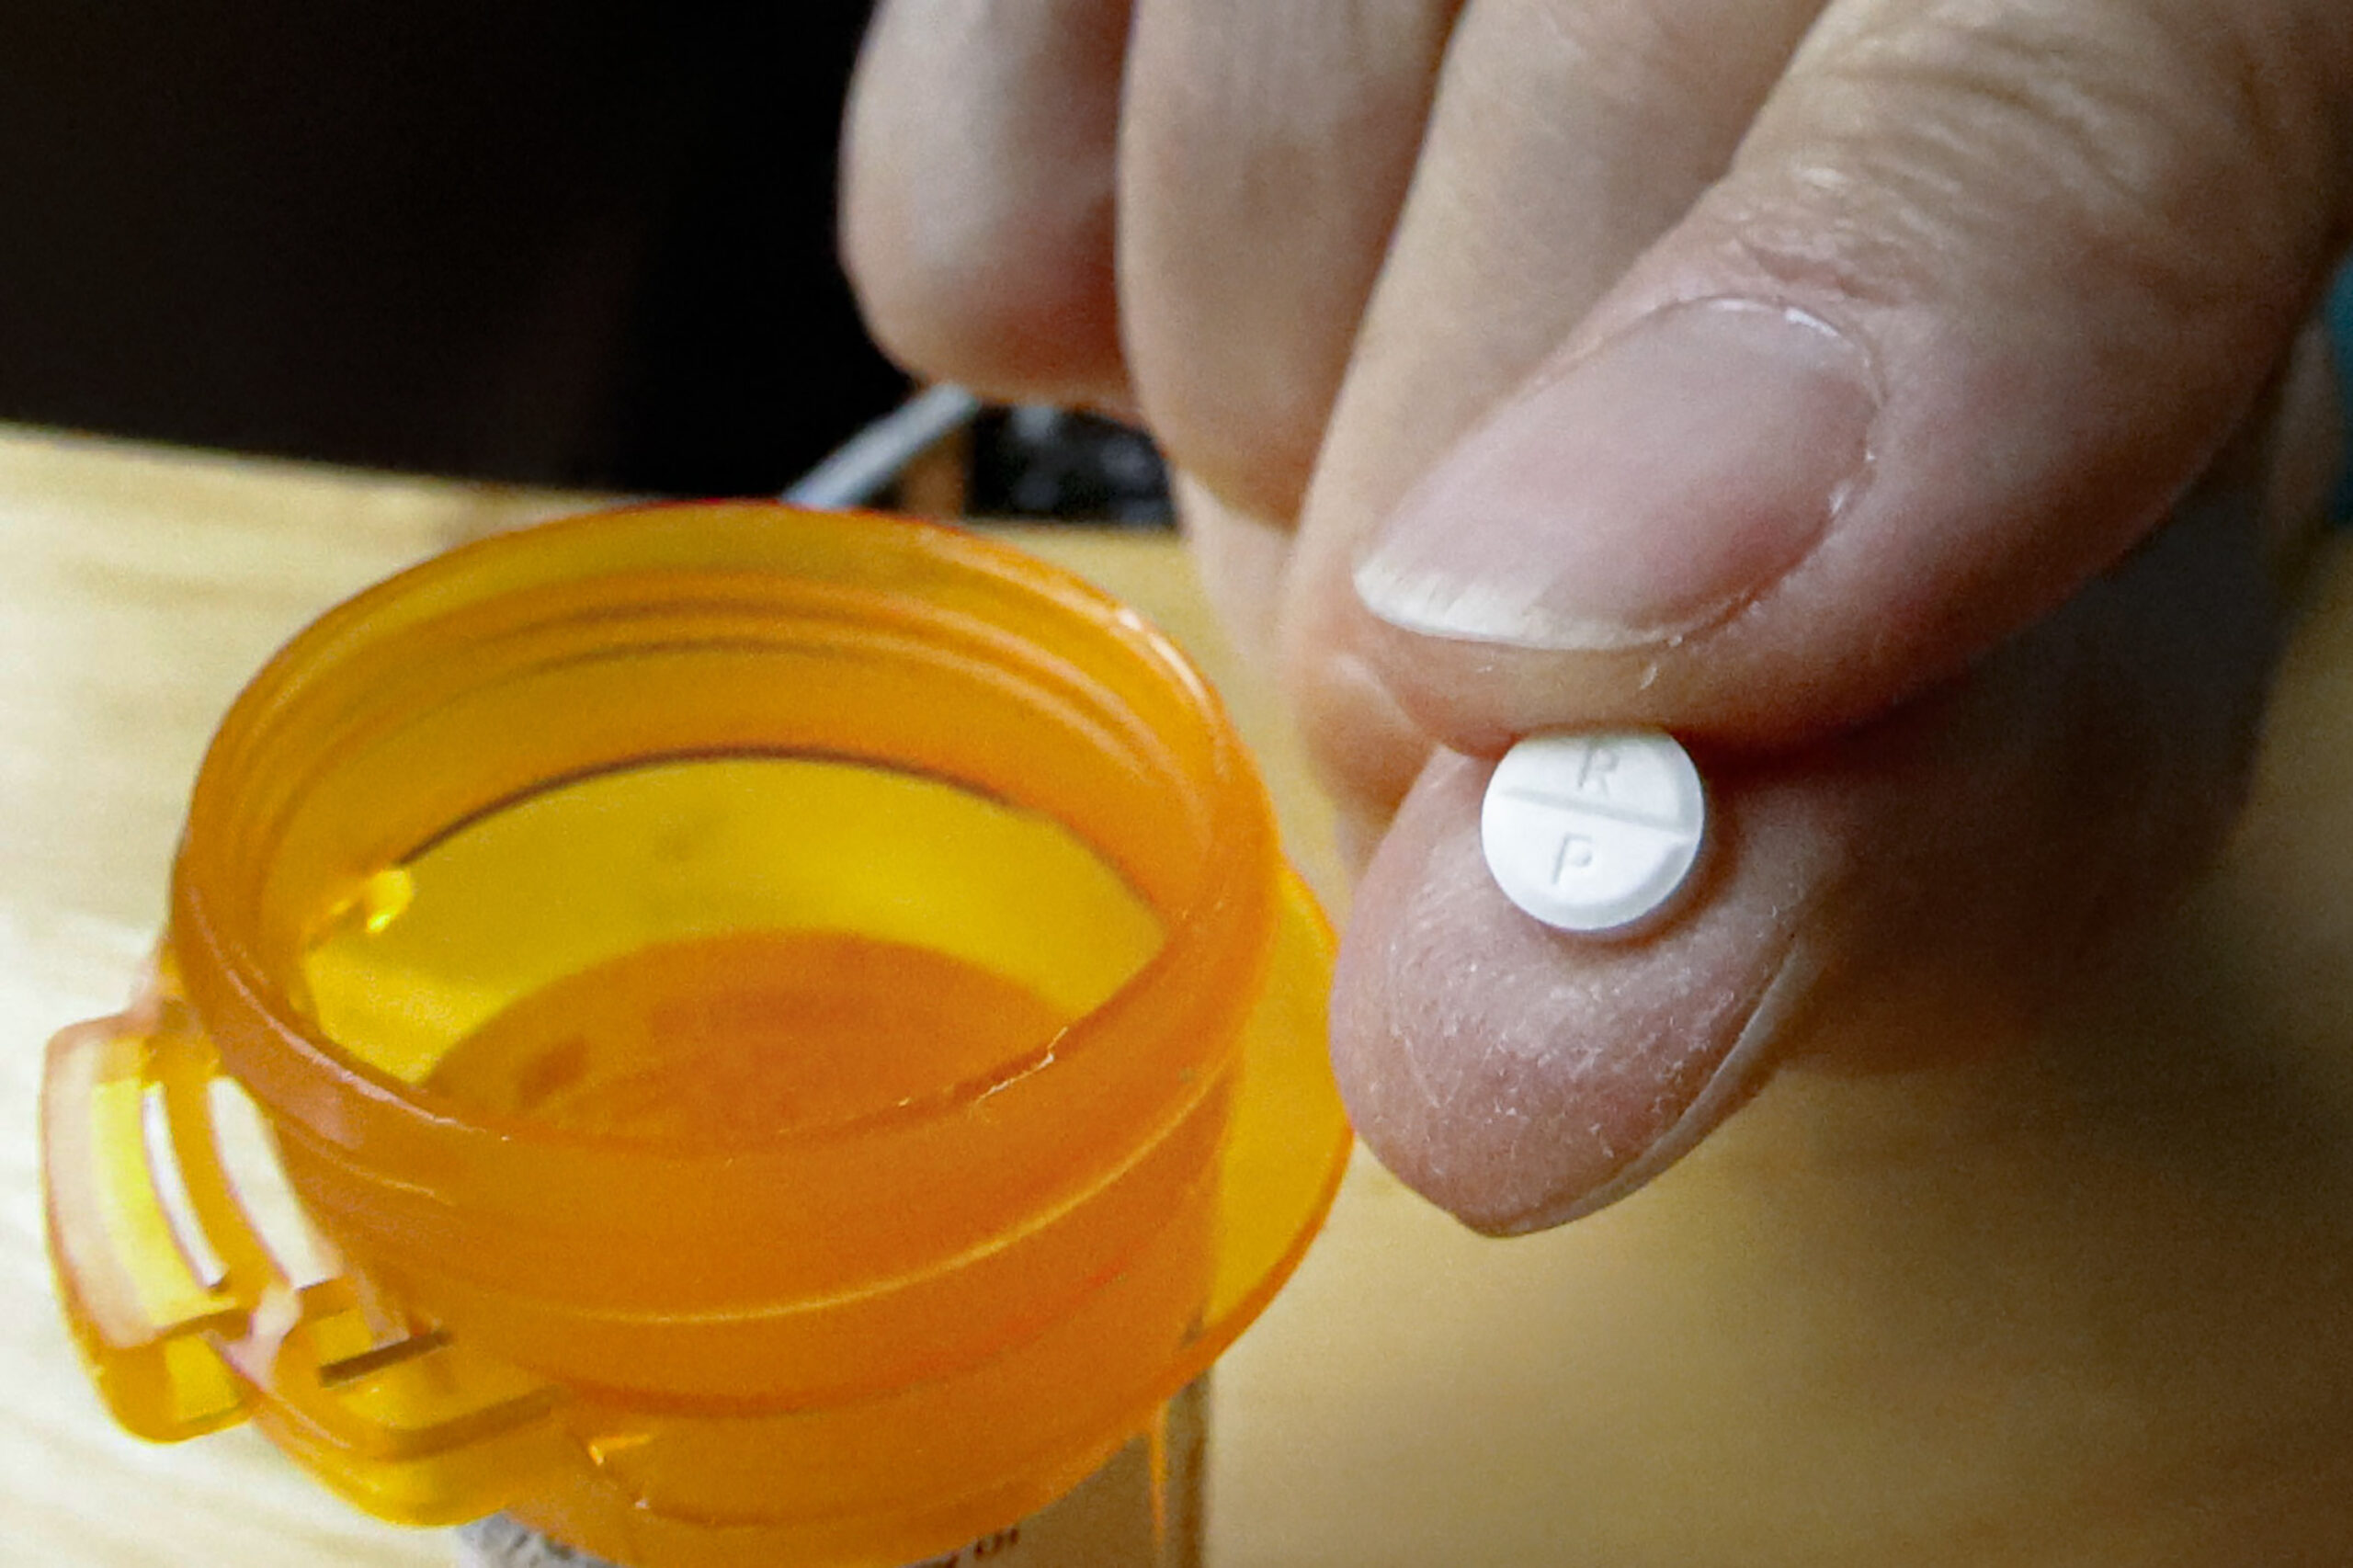 Patient shows Oxycodone prescription